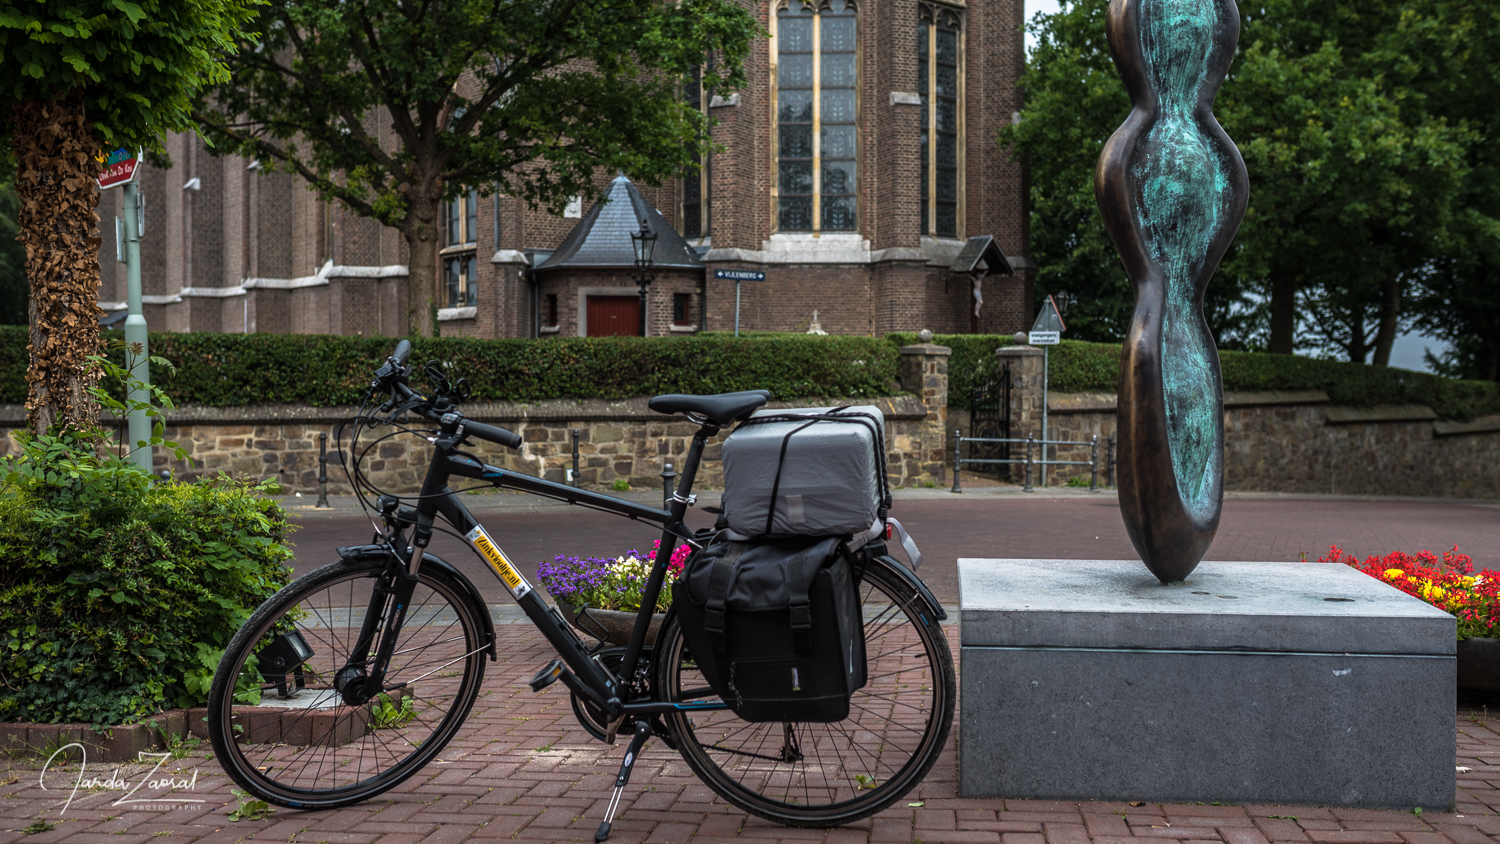 Bike ready for adventure in Netherlands